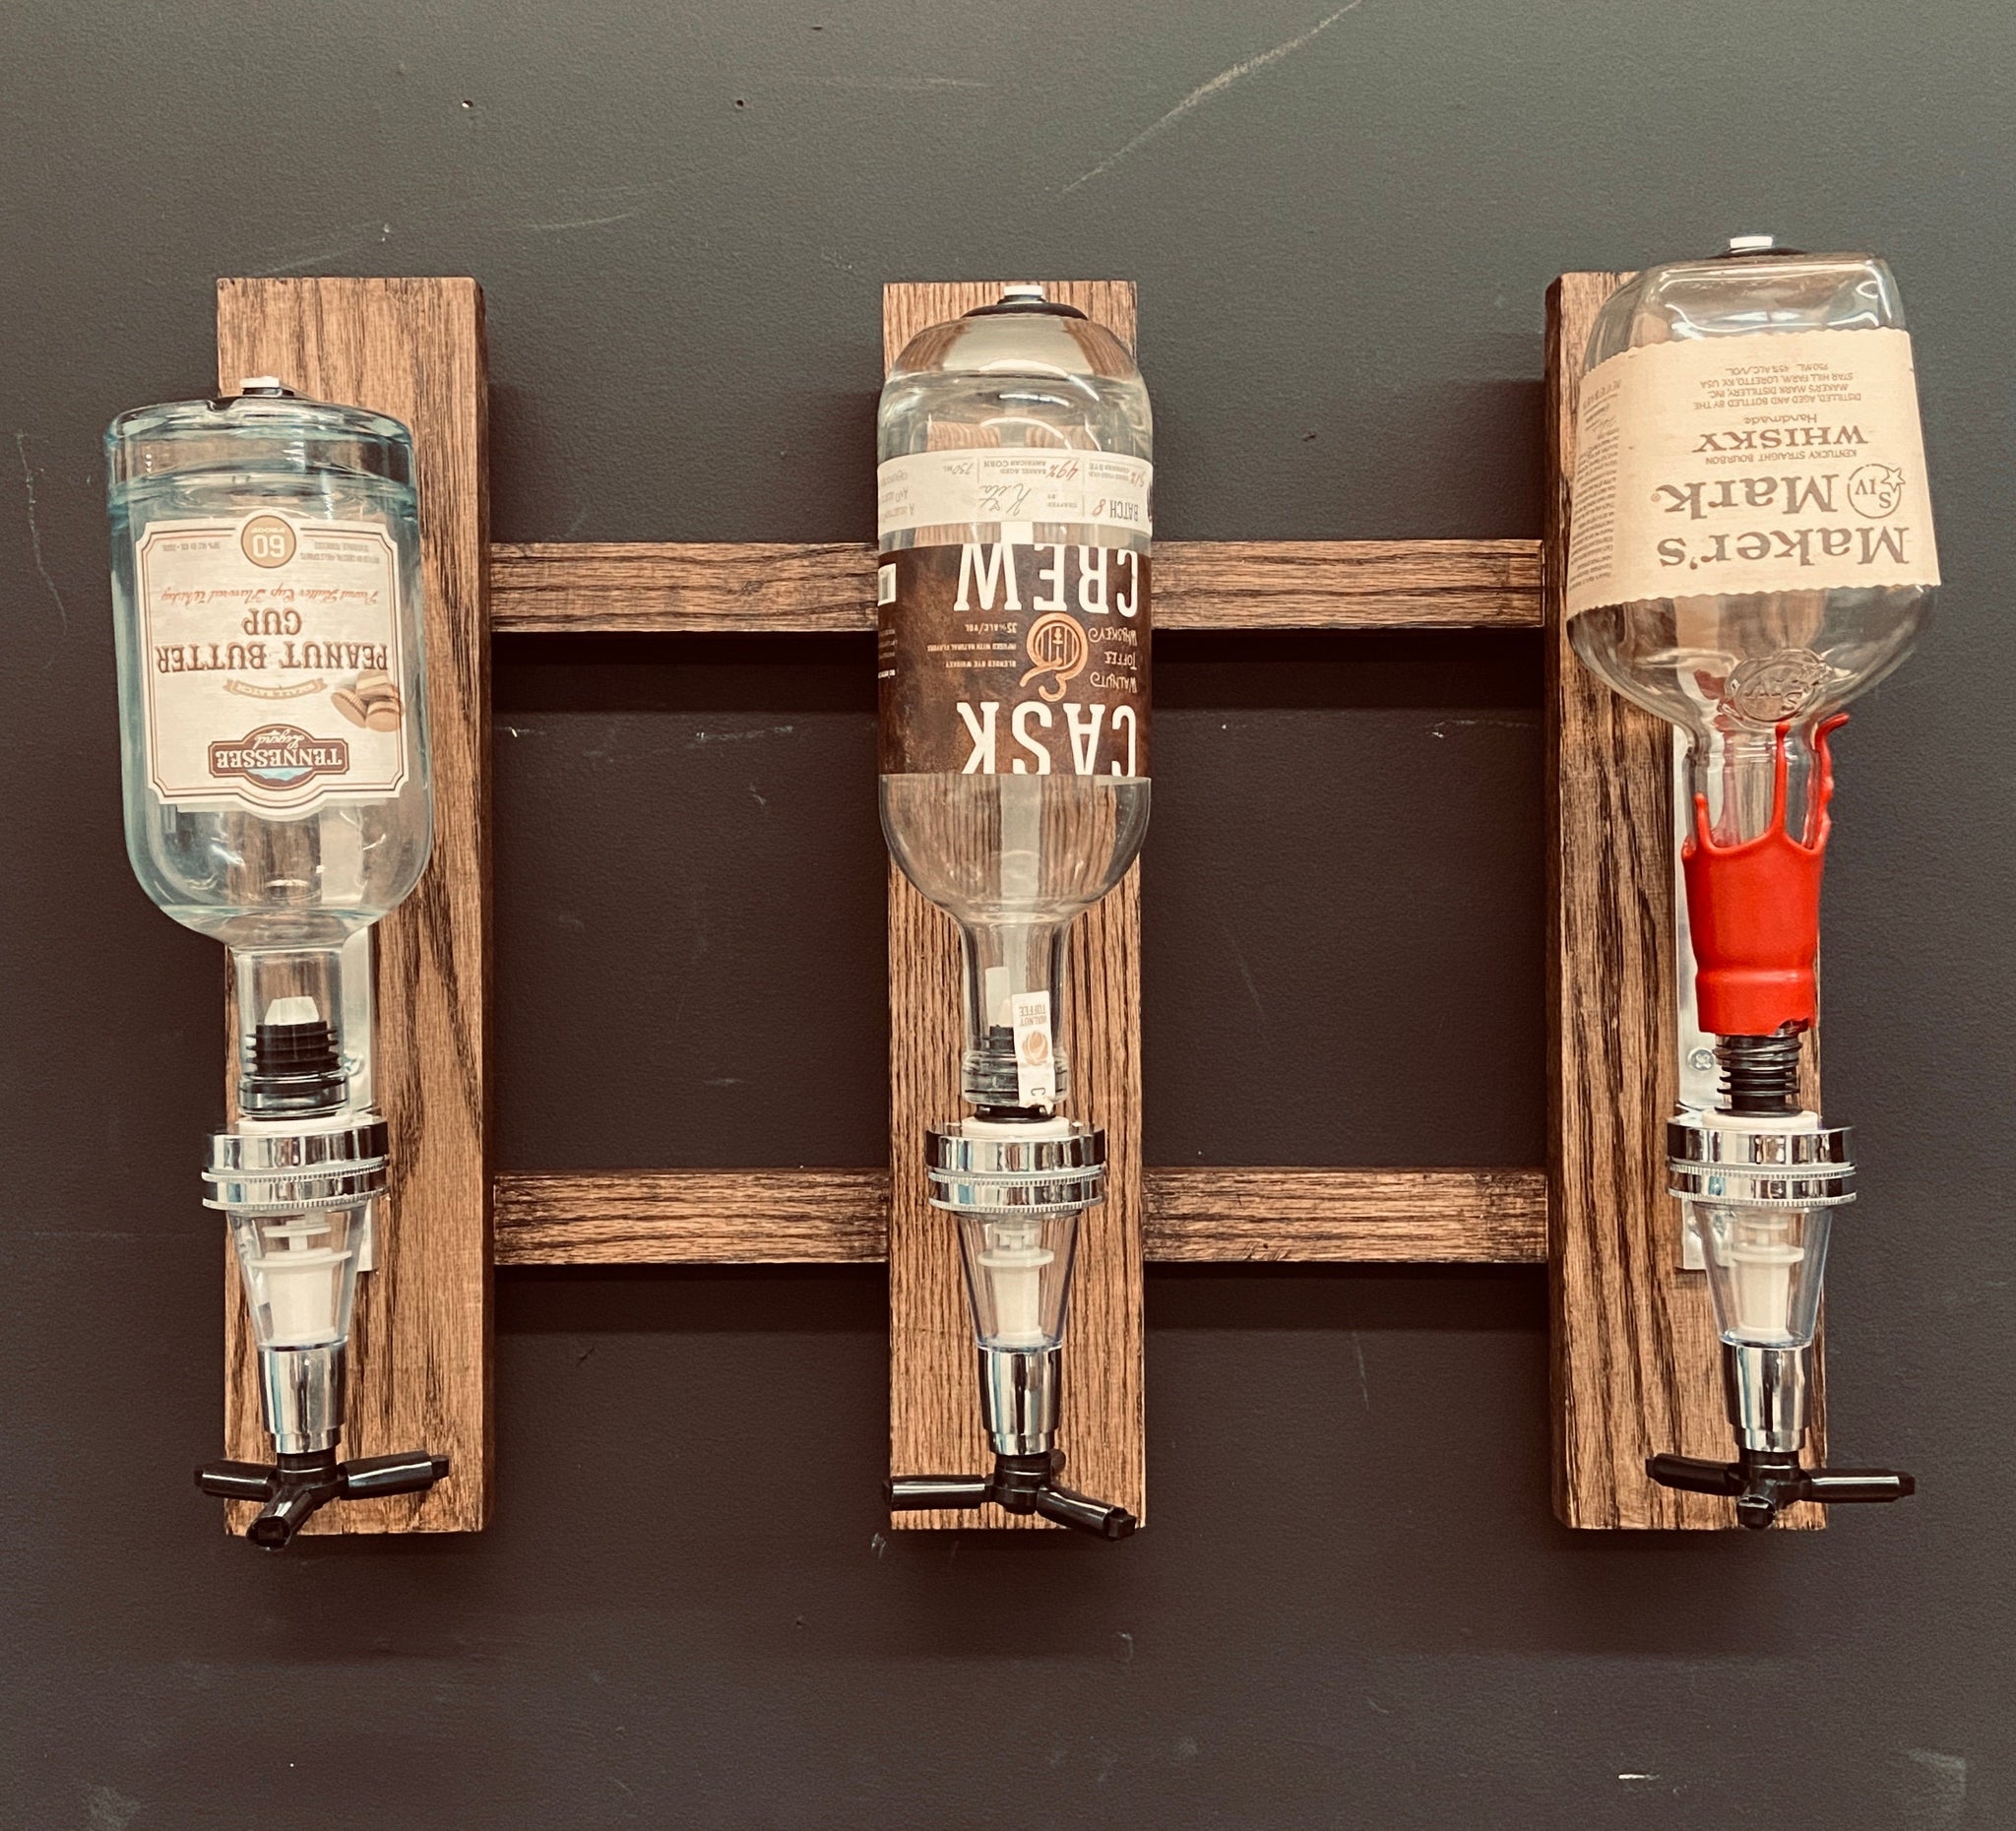 Liquor alcohol Dispenser-Red Oak-FREE SHIPPING